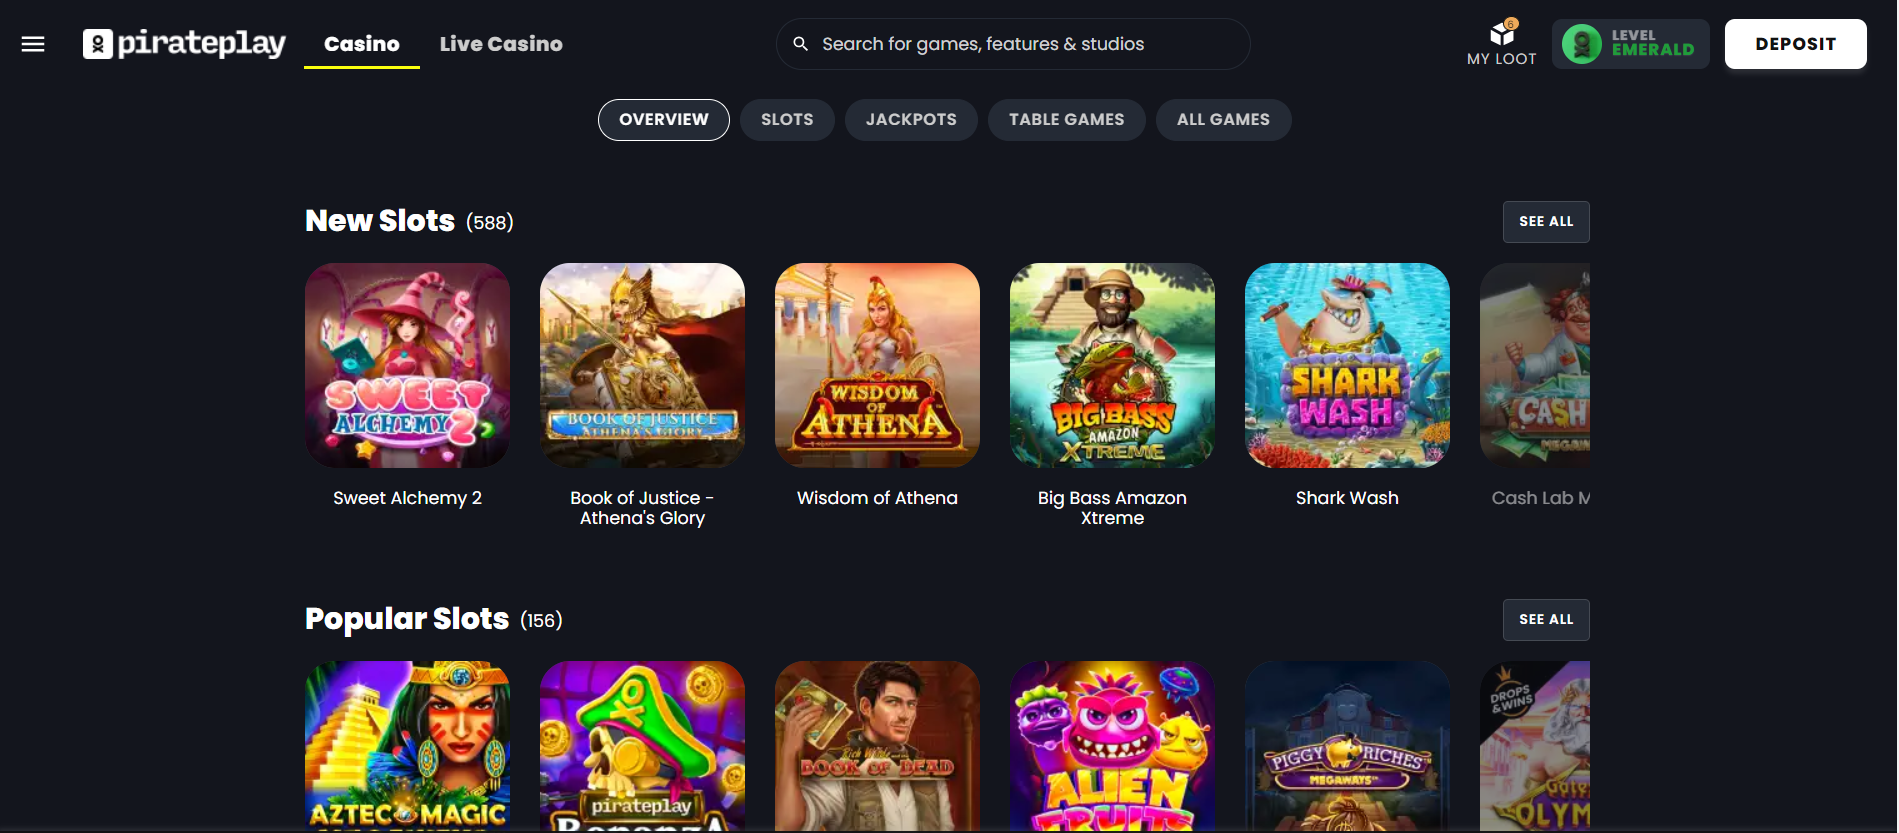 Screenshot of Pirateplay Casino's landing page